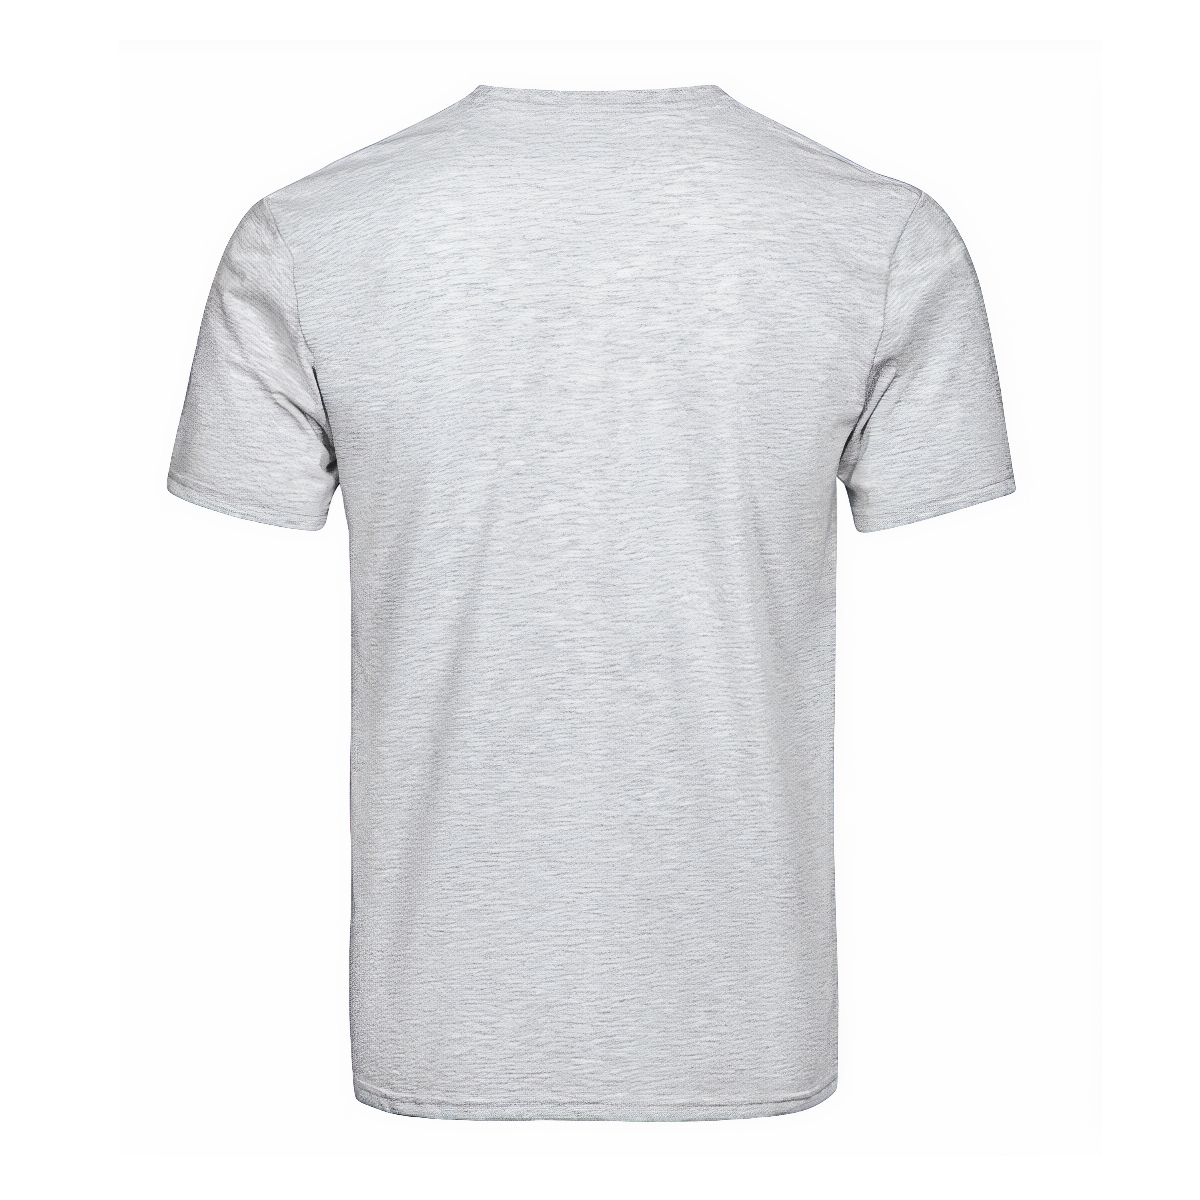 Heron Tartan Crest T-shirt - I'm not yelling style